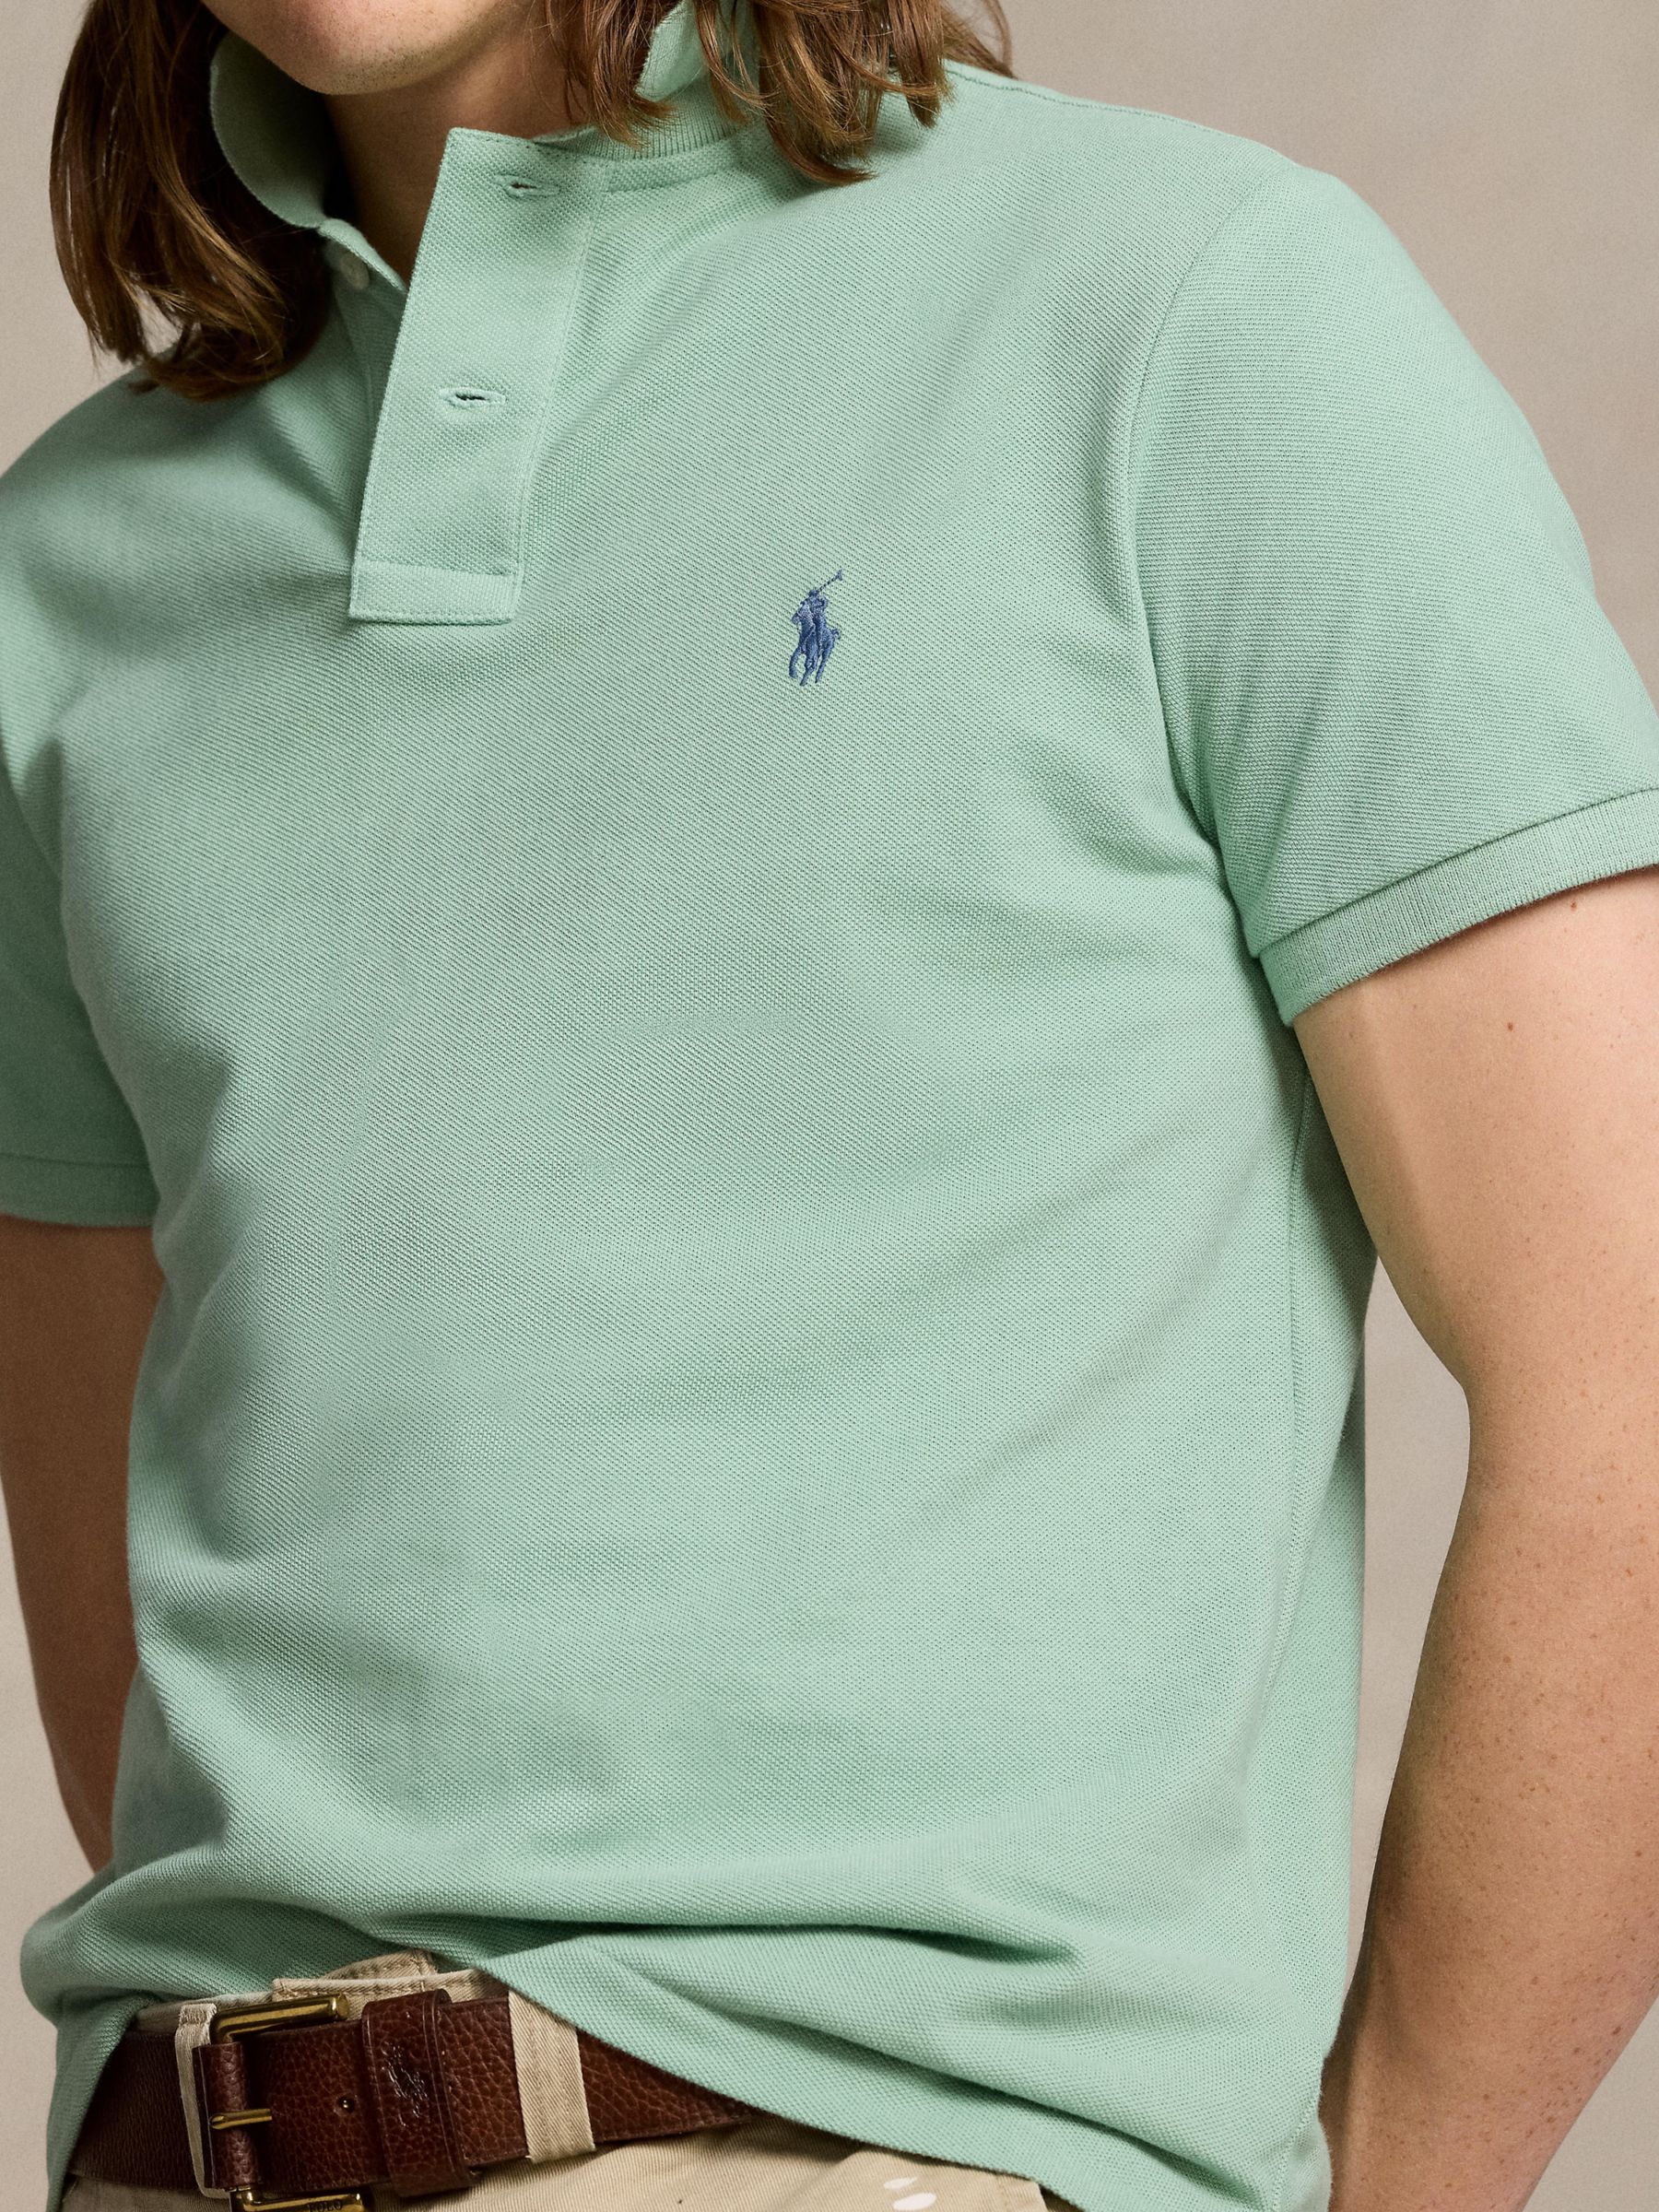 Ralph Lauren American Style Standard Polo Shirt, Faded Mint, S